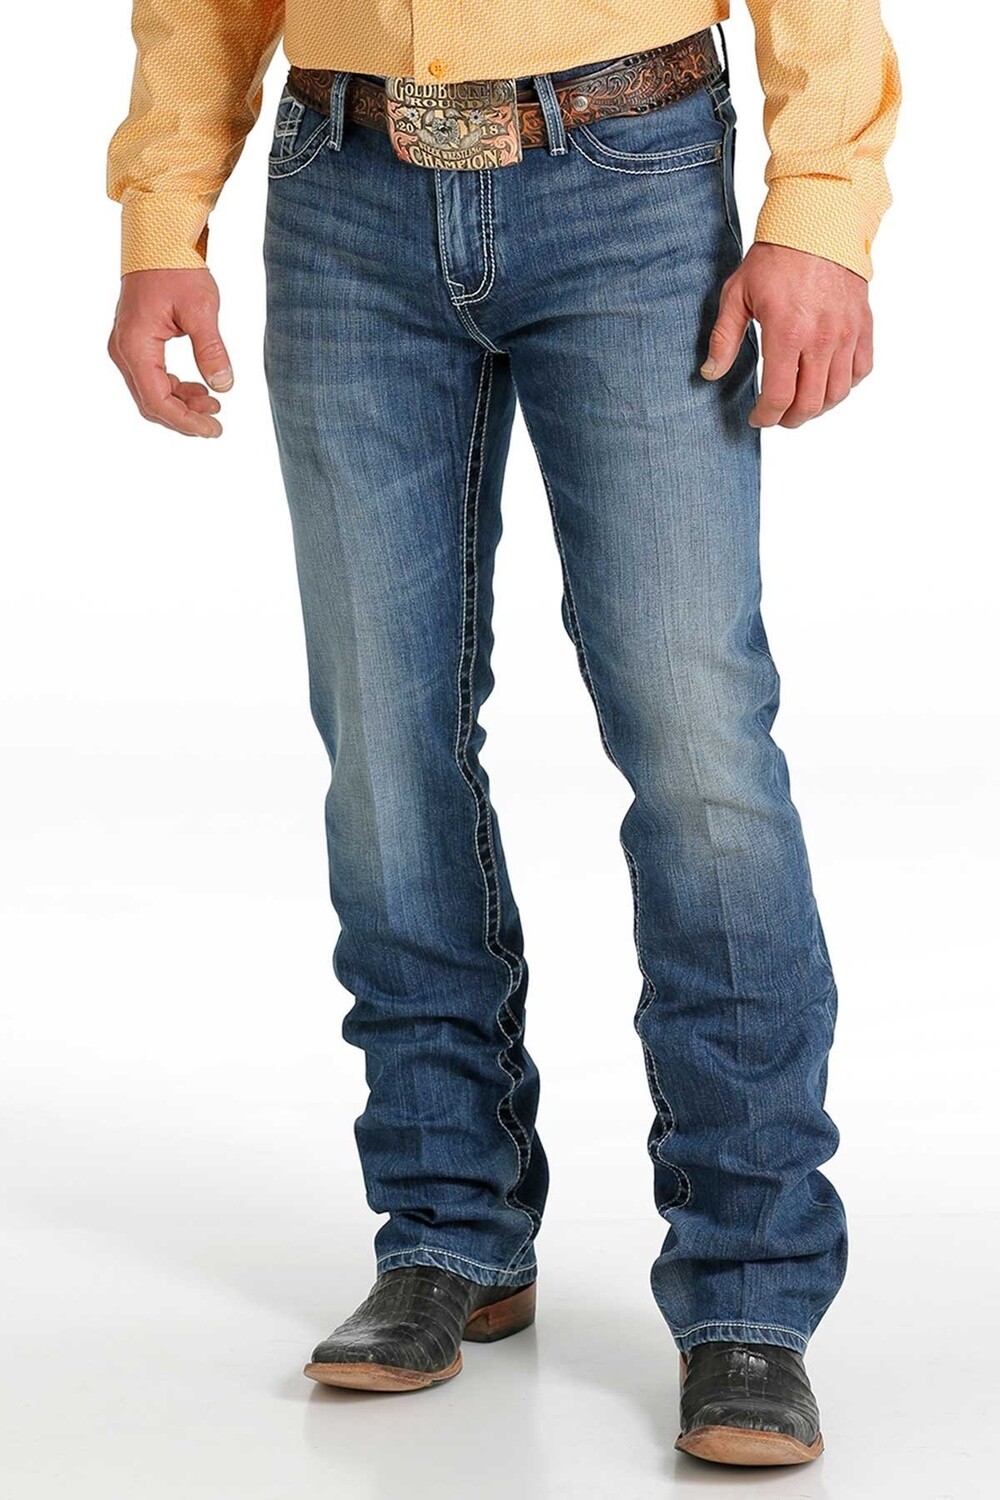 MB55836001 Men's Cinch IAN Slim Fit Medium Wash Jean